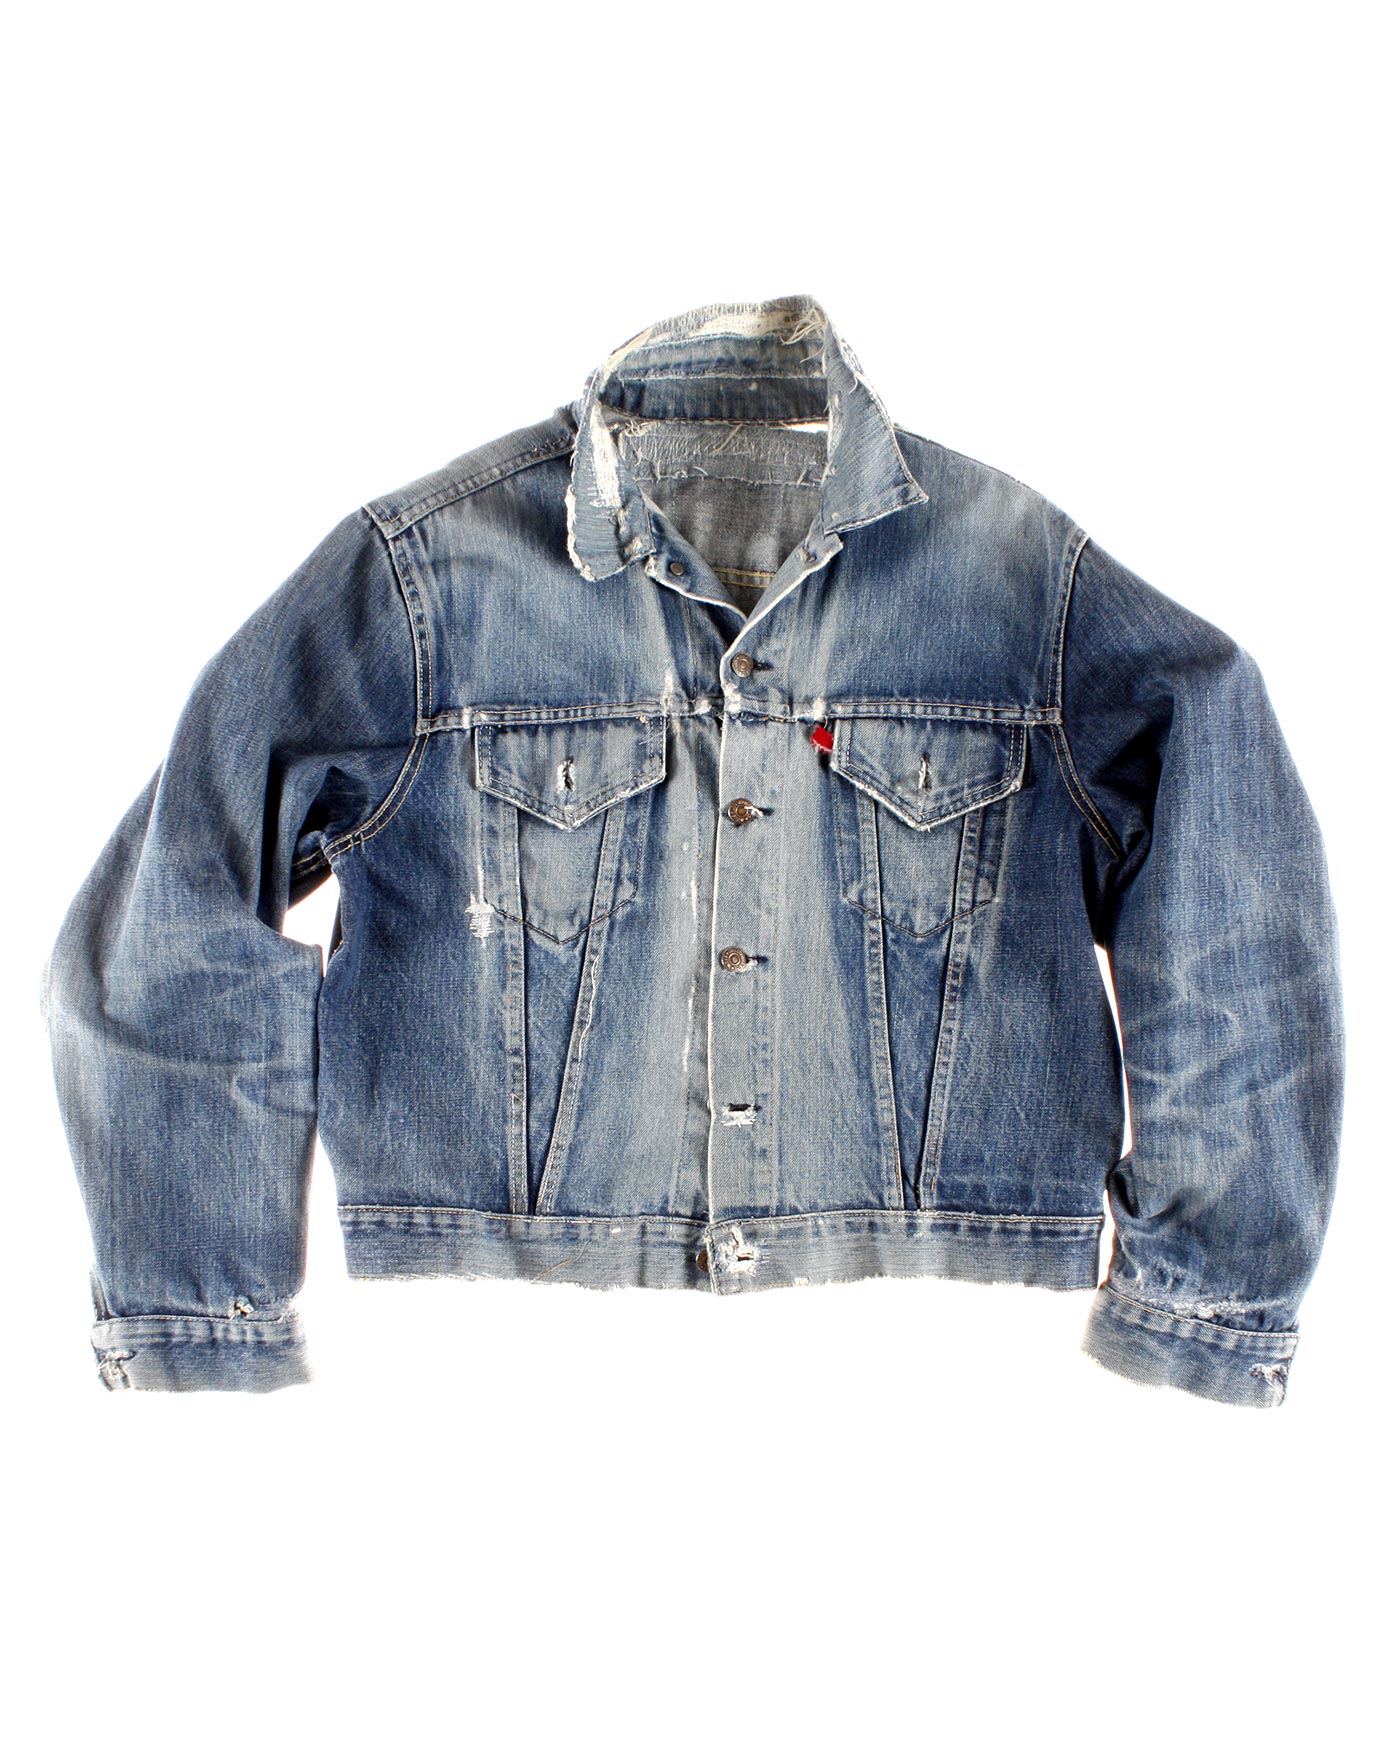 LEVIS denim jacket Big E 50/60s – Madeinused